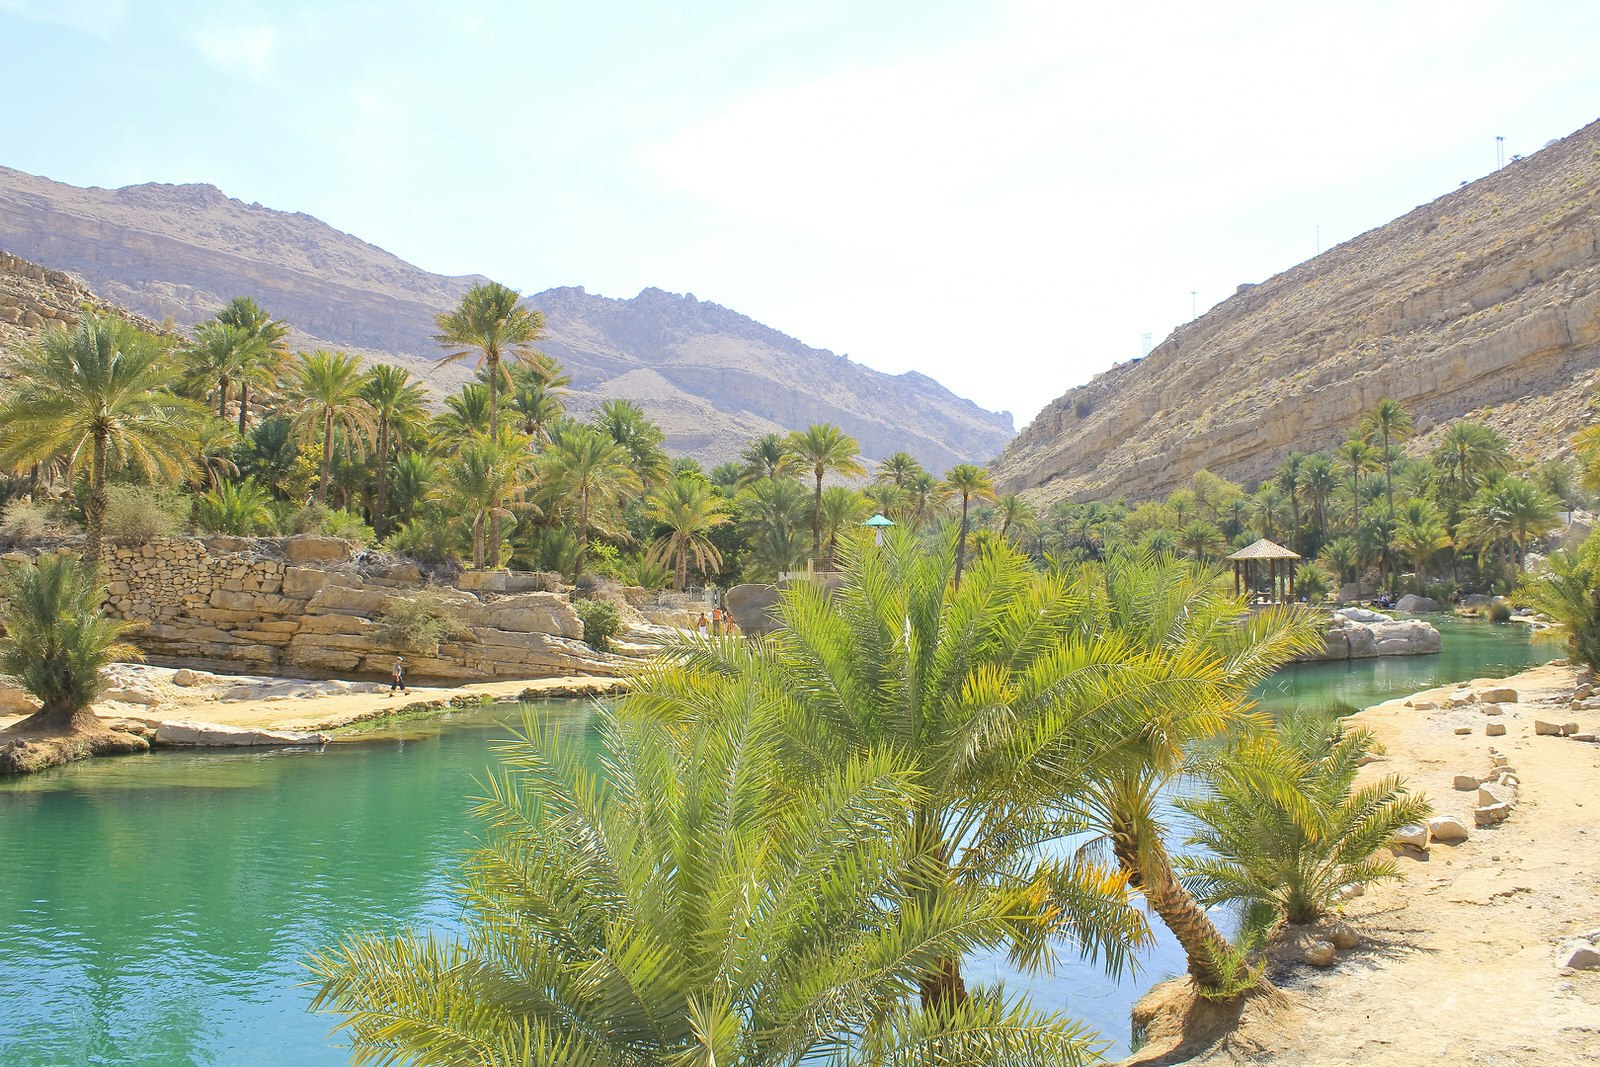 Wadi Bani Khalid, Ash Sharqiyah region, Oman. Image by dr322 / Getty Images